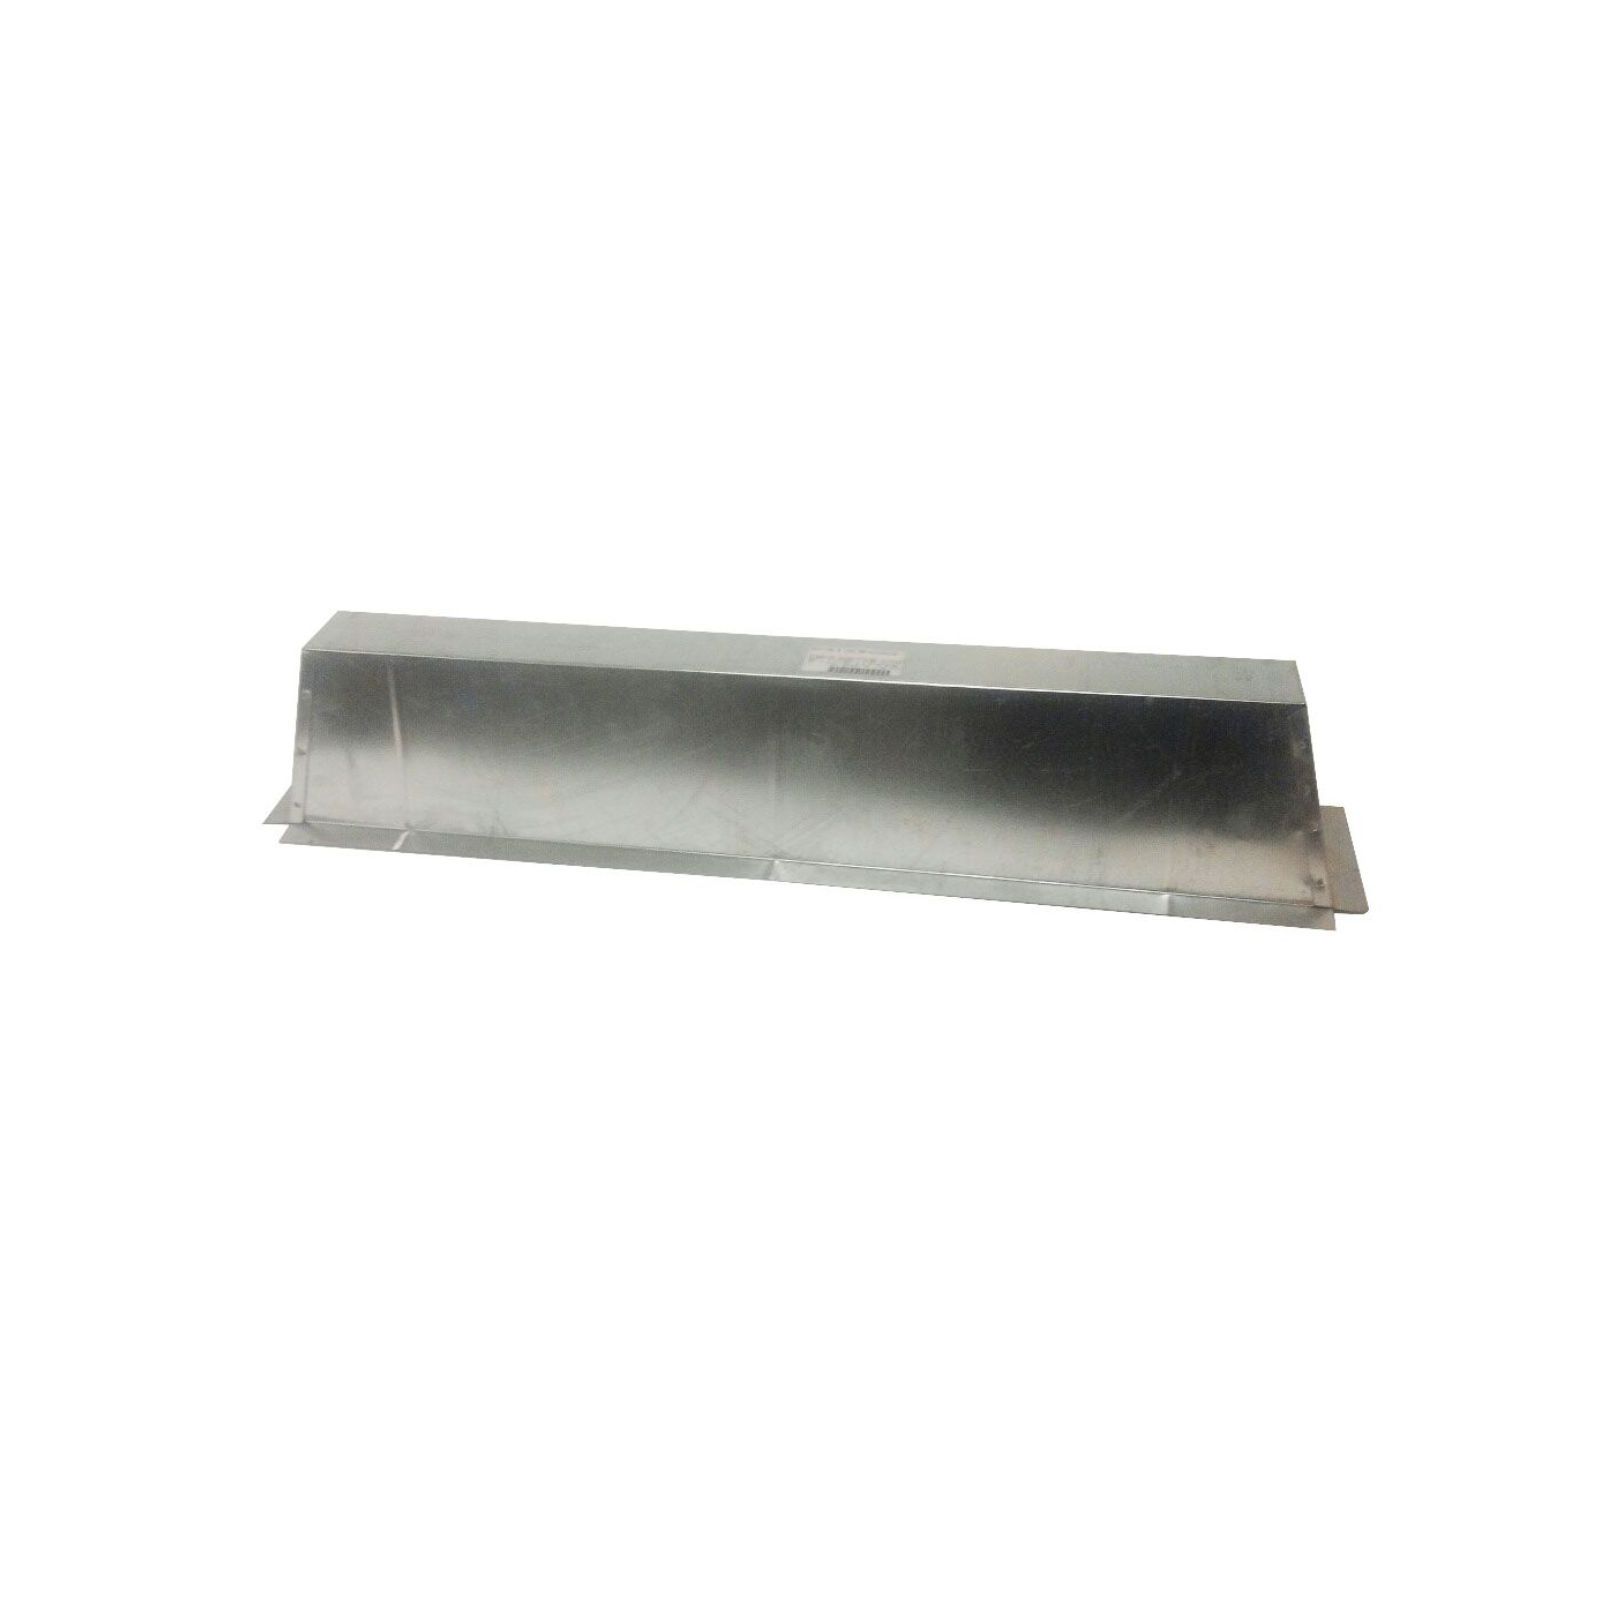 Modular Metal XXESI3302H03 - Furnace Stand - 26 Gauge - 3/4" Flange (4) Side S33" X 06" /30" X 2.5" - 3" High